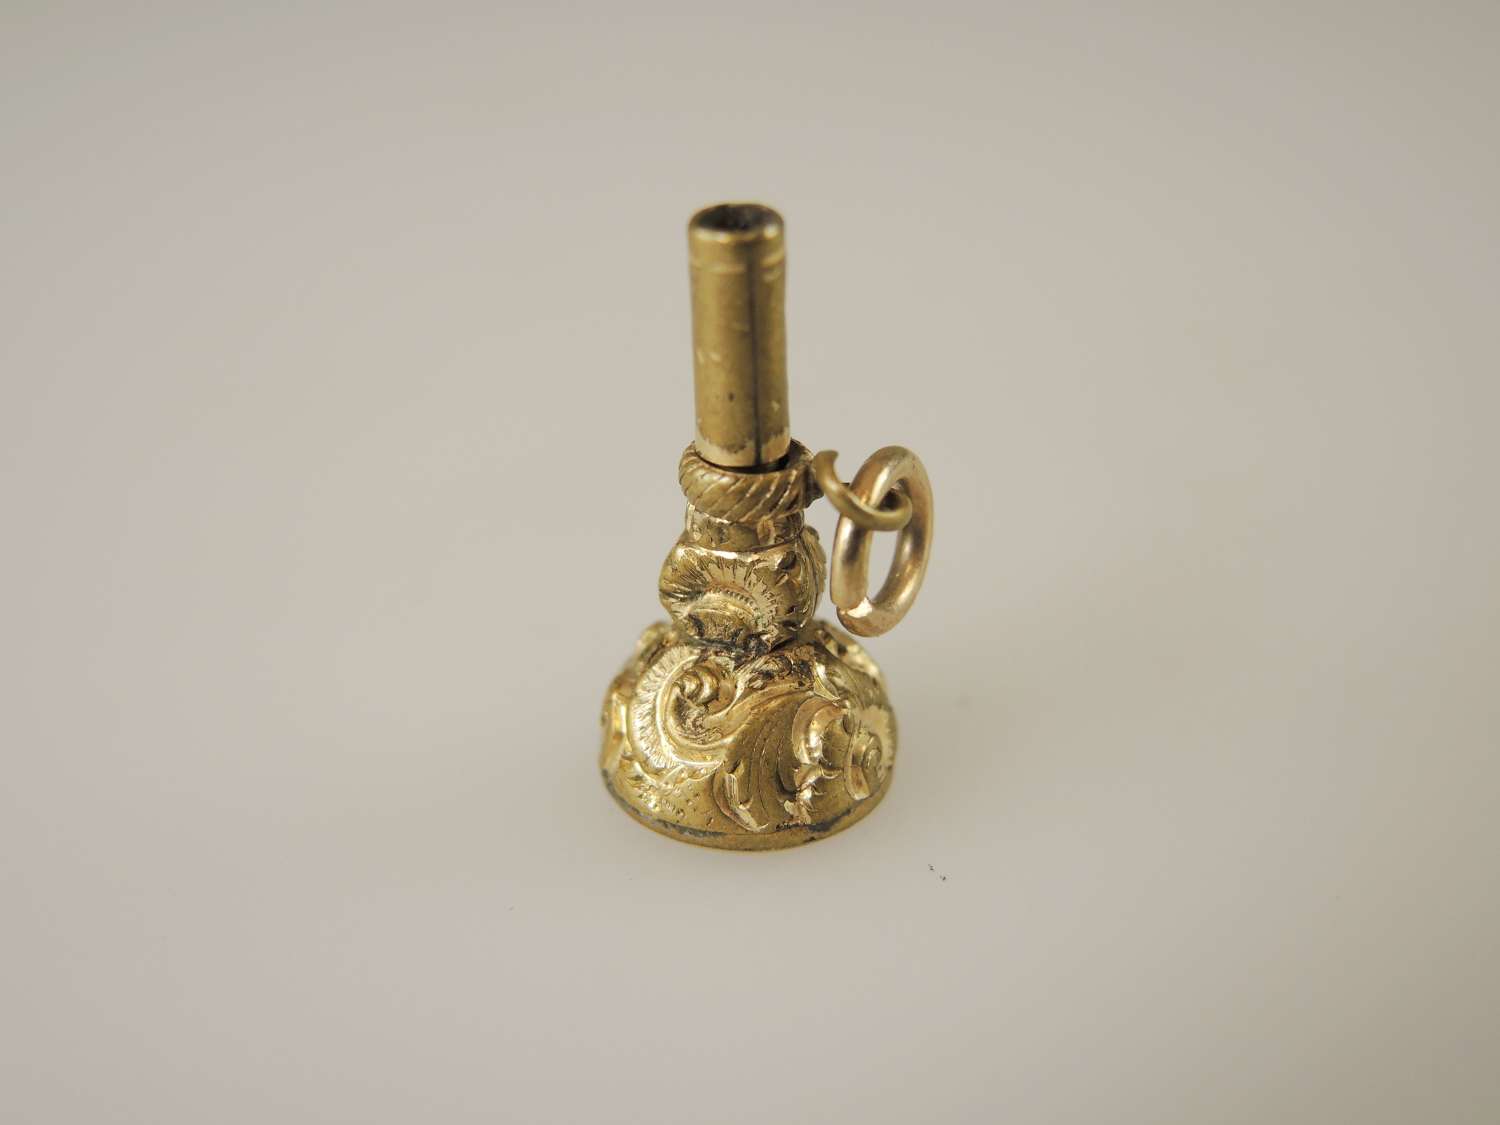 Small Gilt and stone set seal / pocket watch key c1850